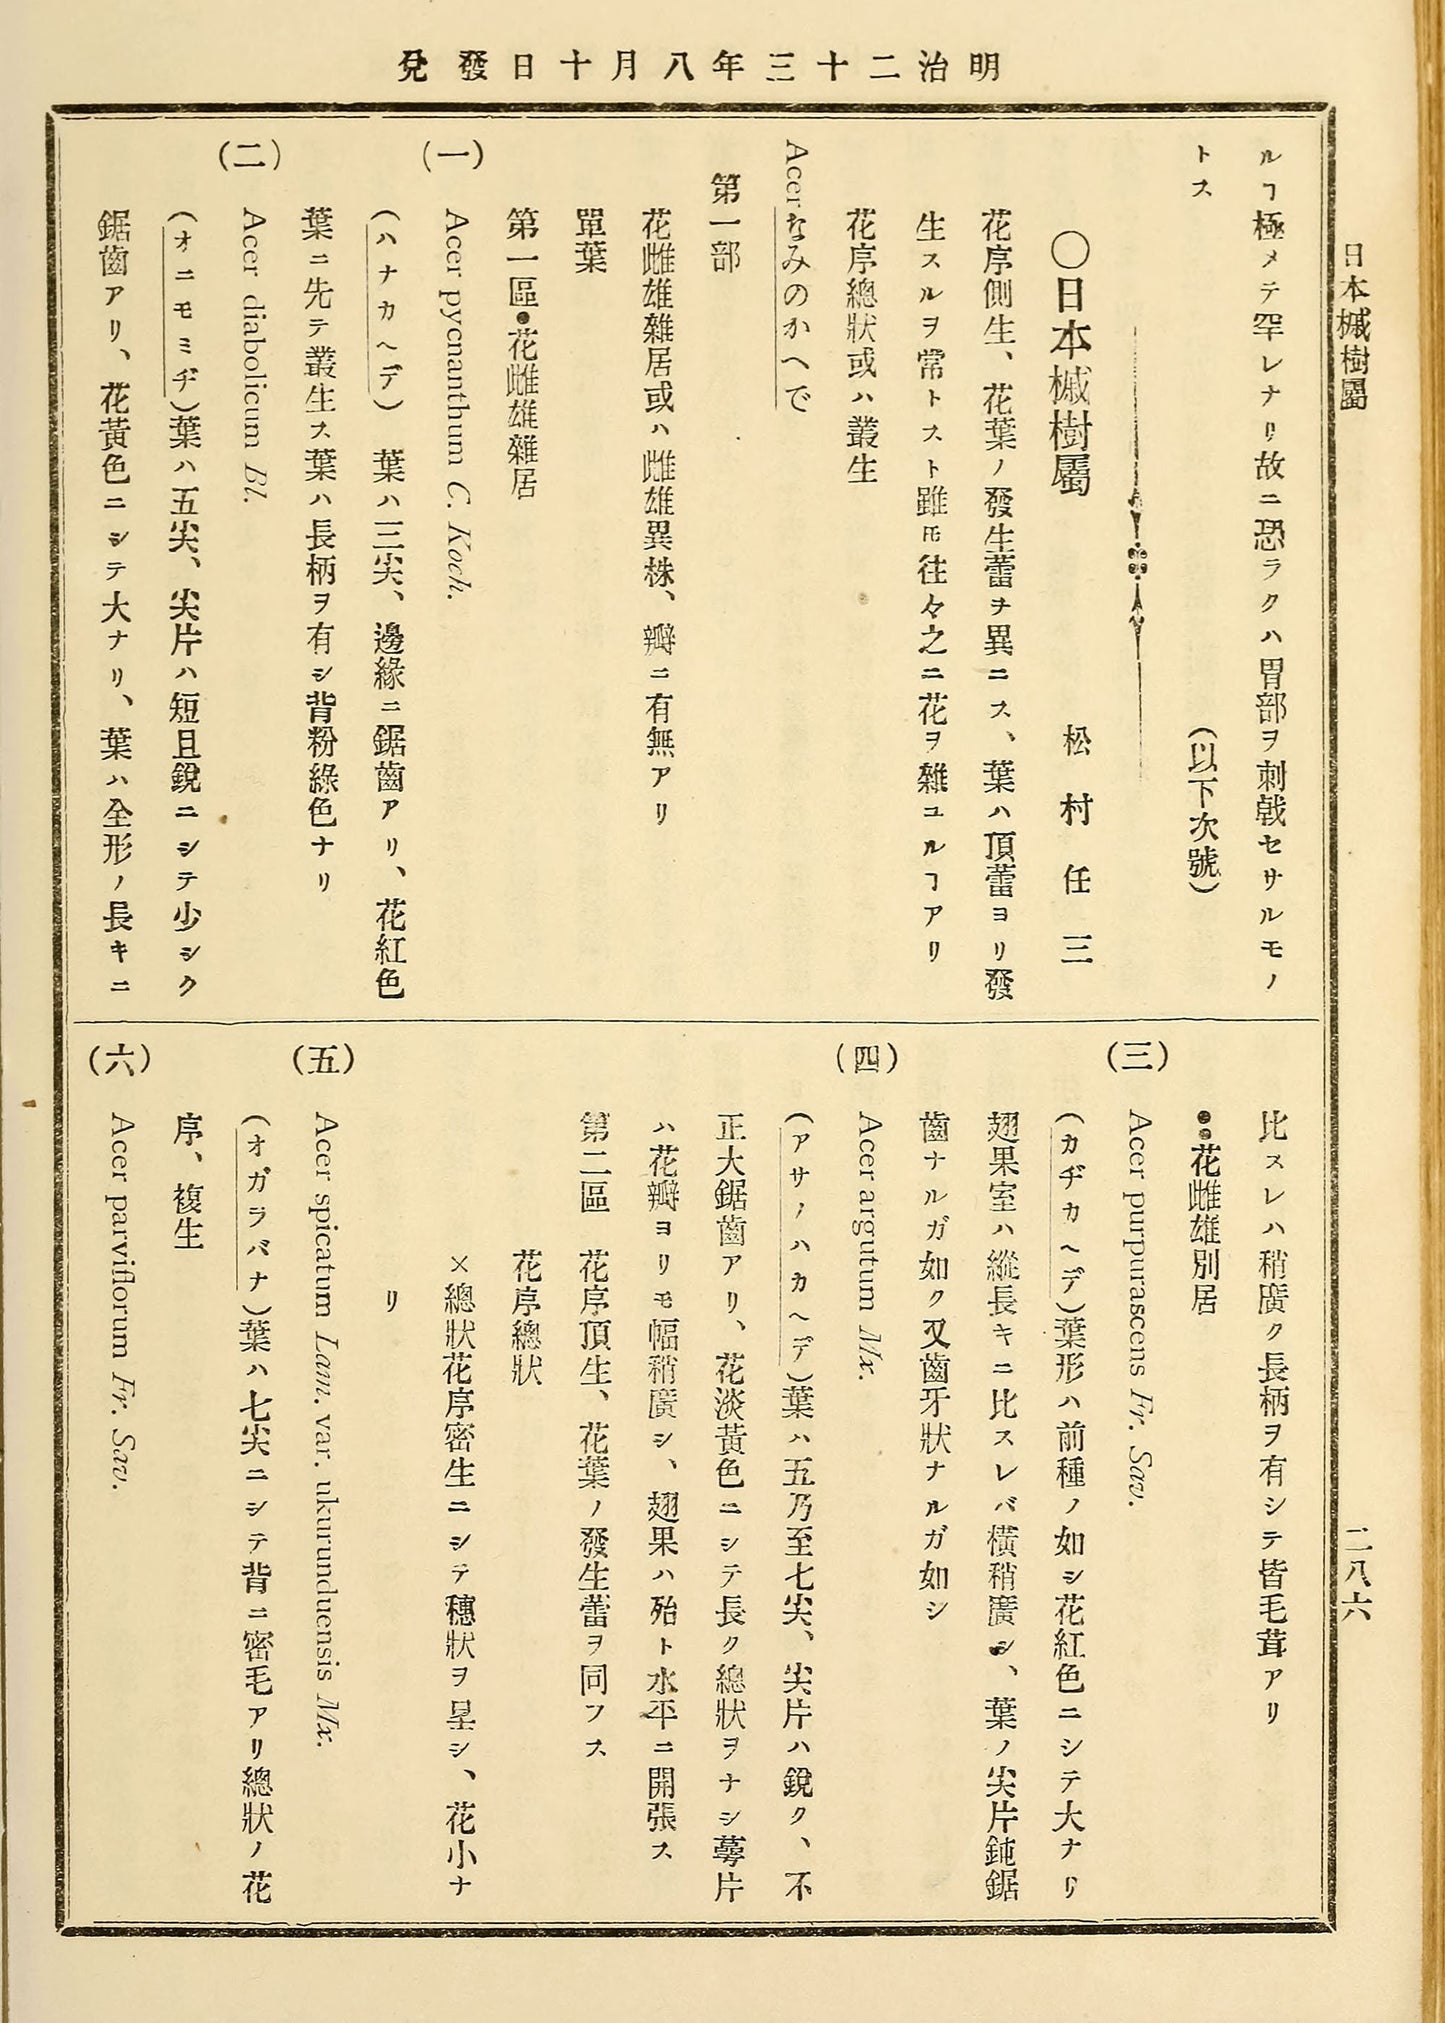 Japanese Vintage Vertical Print Type Pages Set 1 [100 Images]